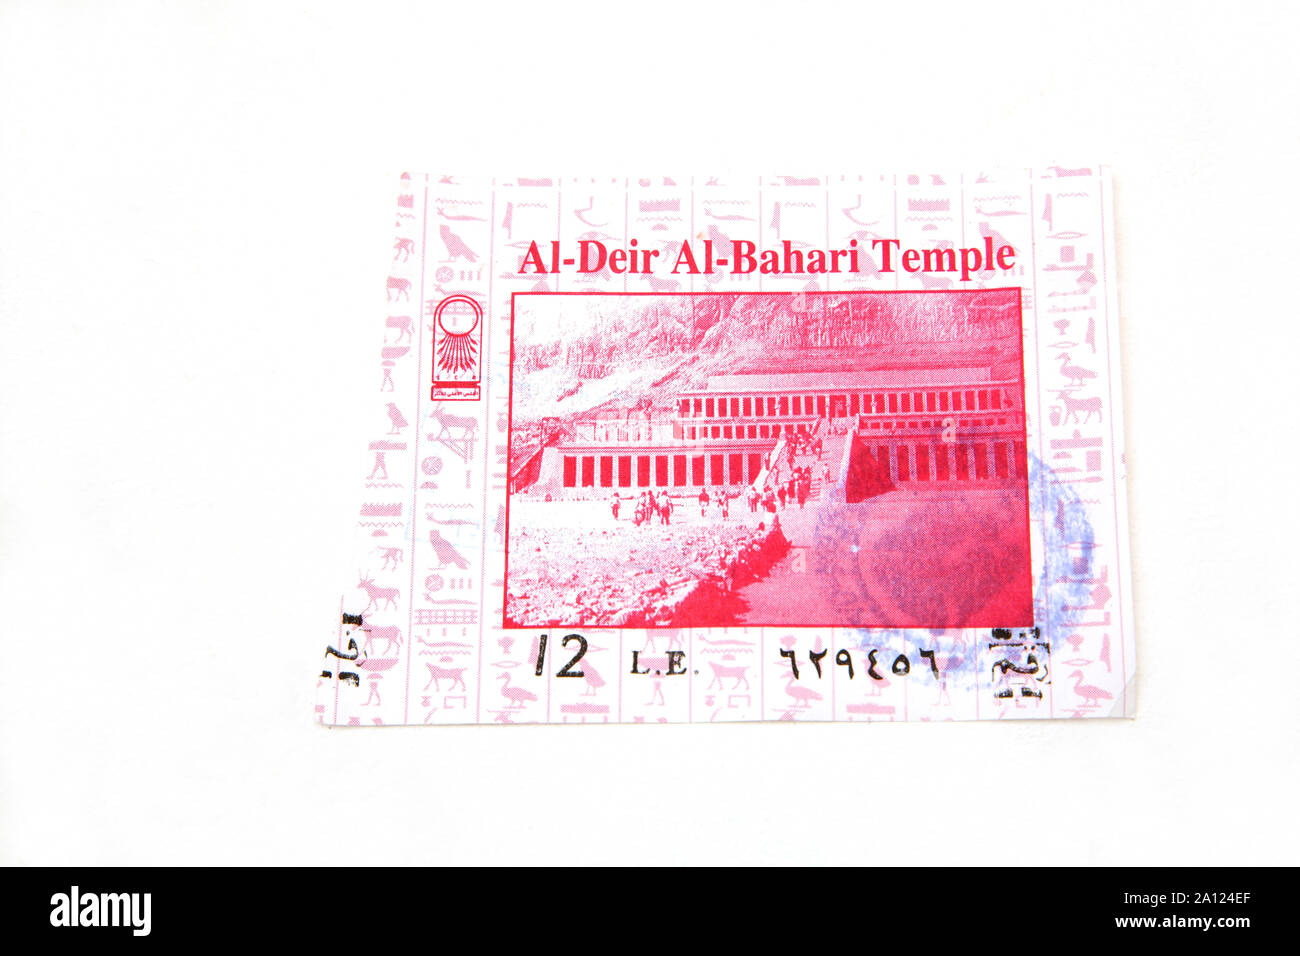 Entrance ticket to Al-Deir Al-Bahari Temple Egypt Stock Photo